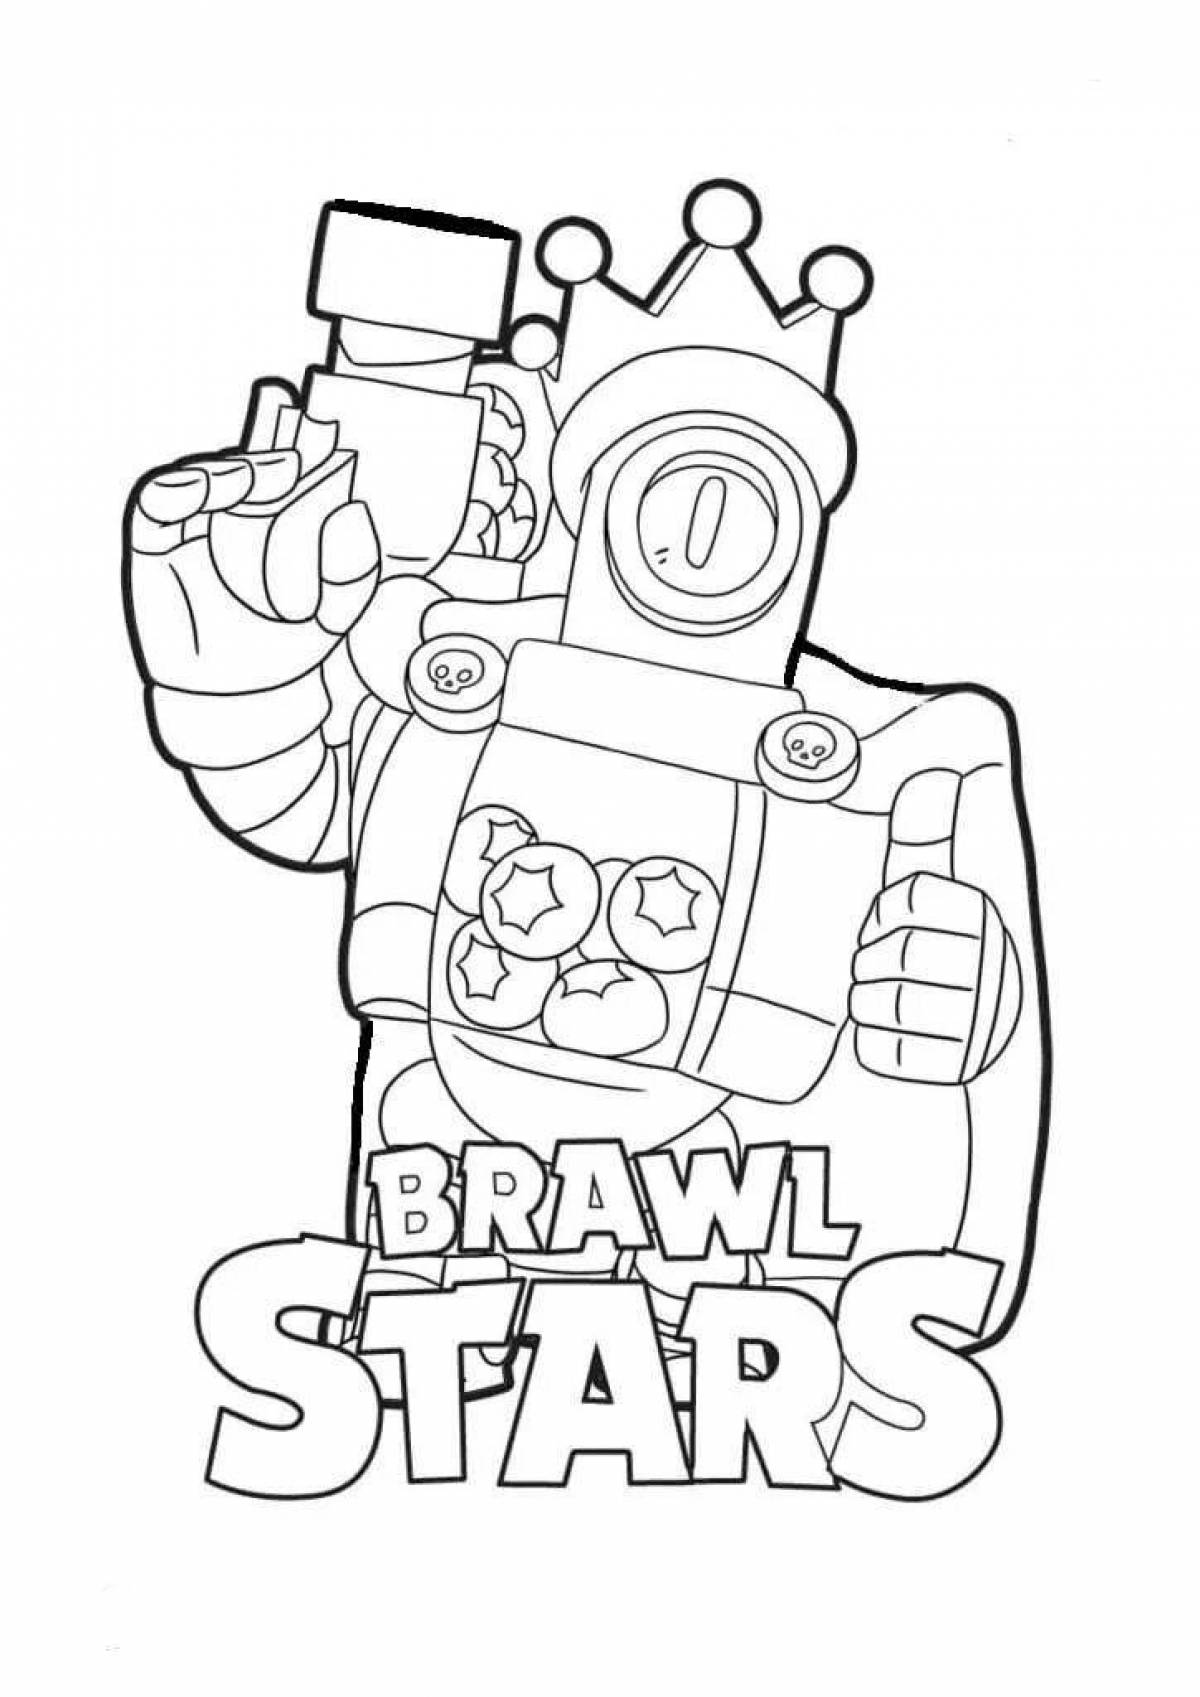 Dazzling brawl stars coloring page